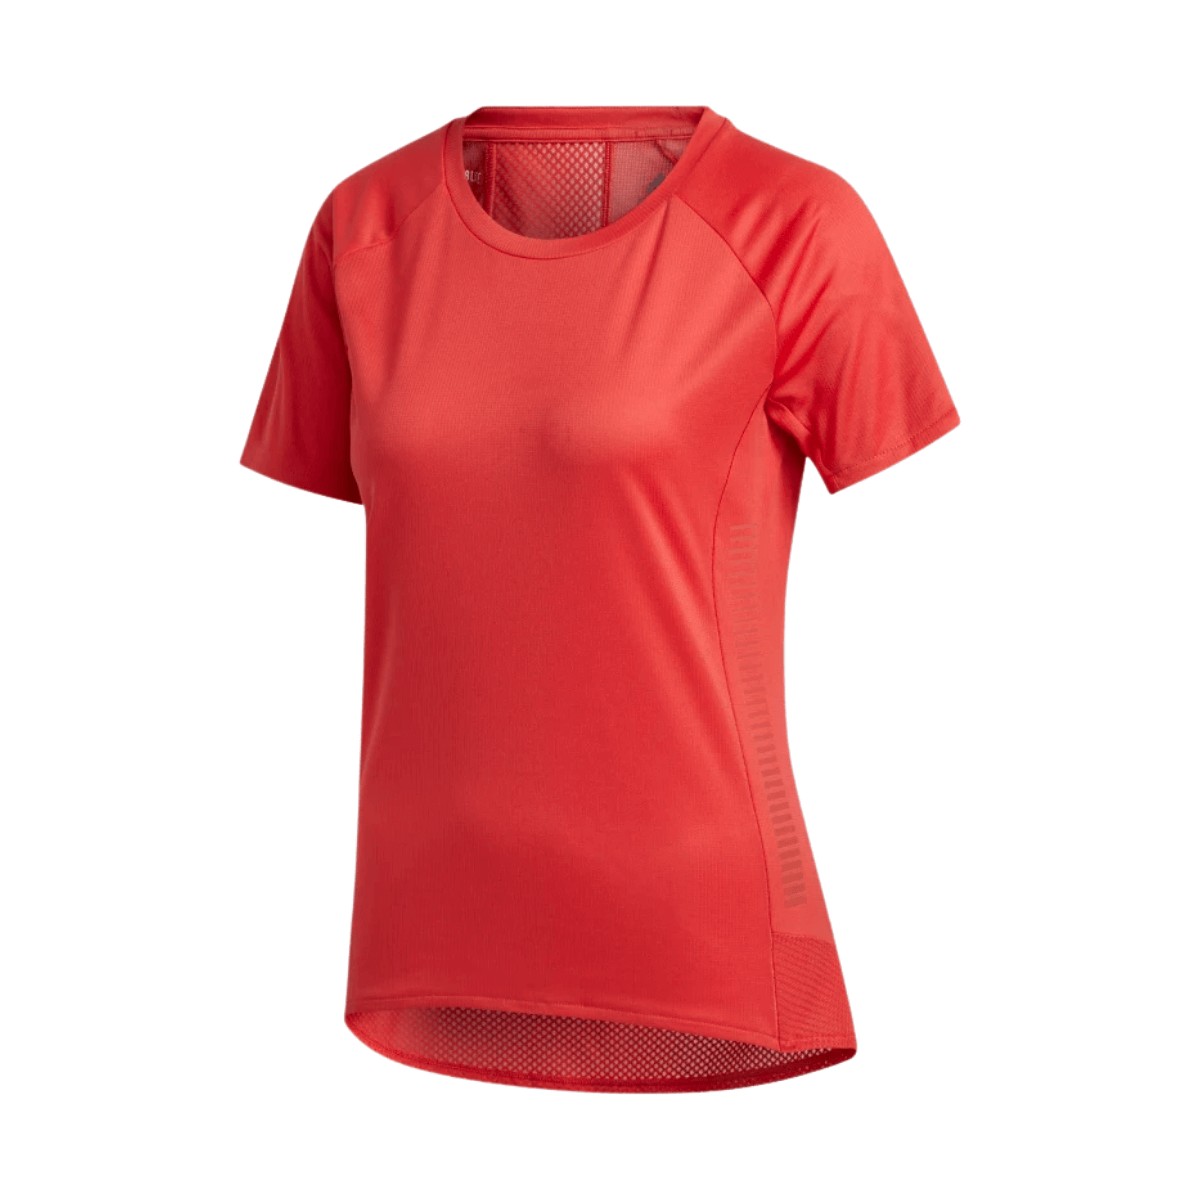 Adidas Running T-shirt Rose Femme, Taille S